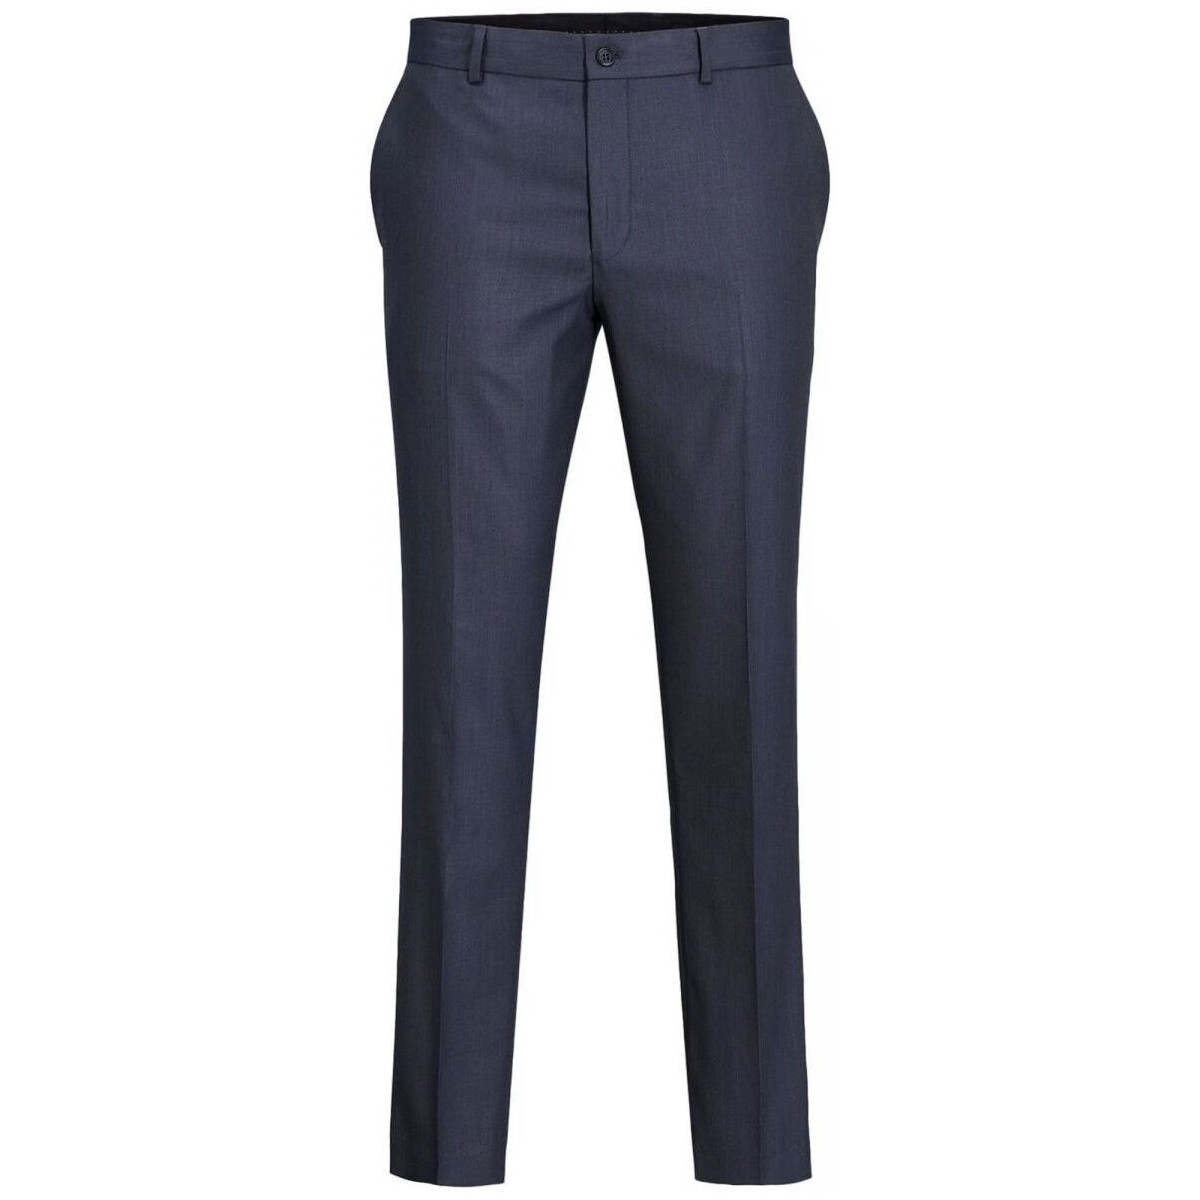 Abbigliamento Uomo Pantaloni Jack & Jones 12084149 ROY TROUSERS-DARK NAVY Blu